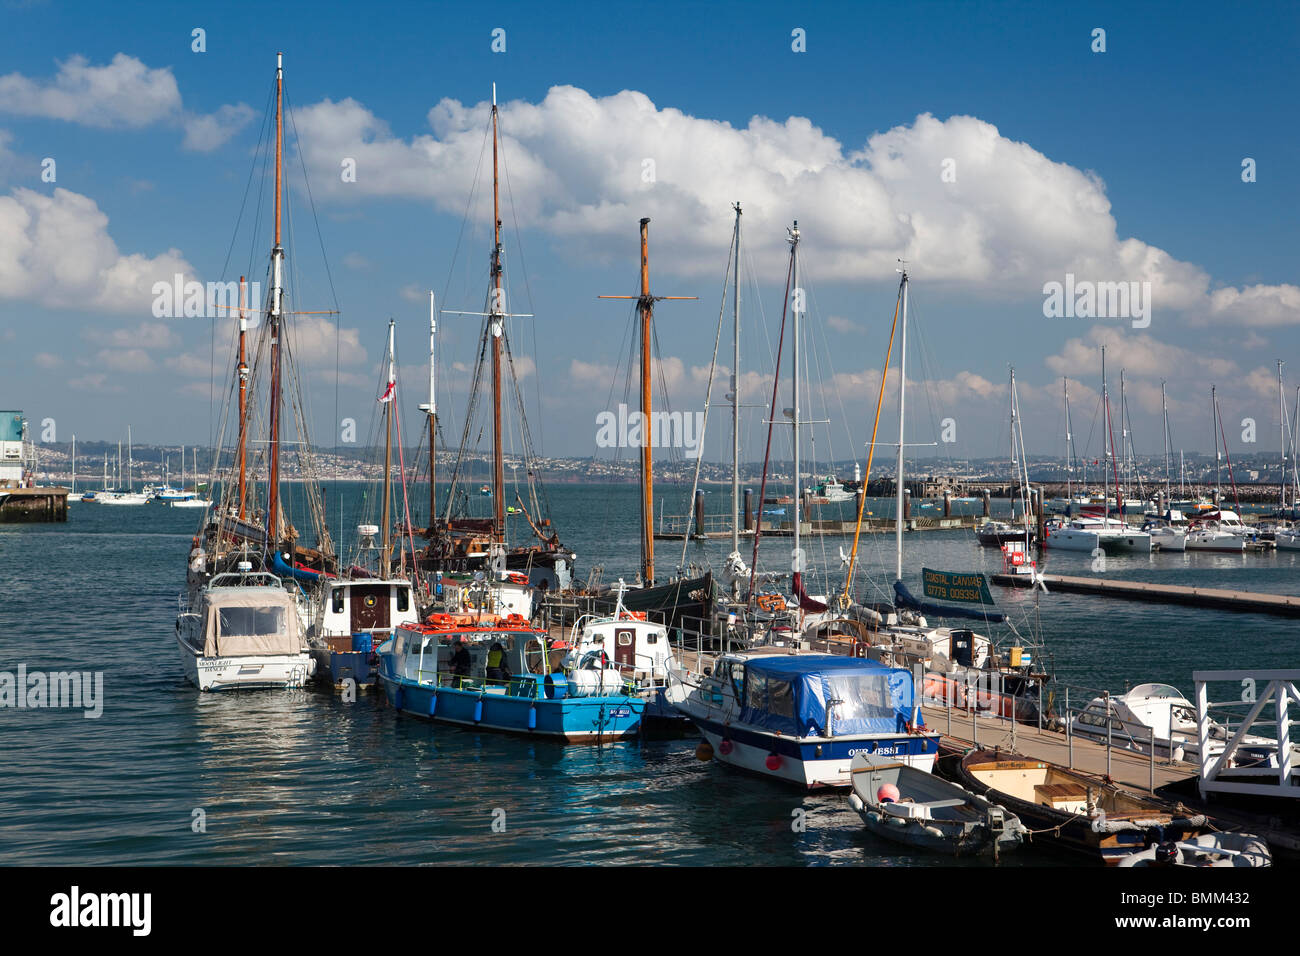 UK, England, Devon, Brixham, leisure boats moored in the marina Stock Photo